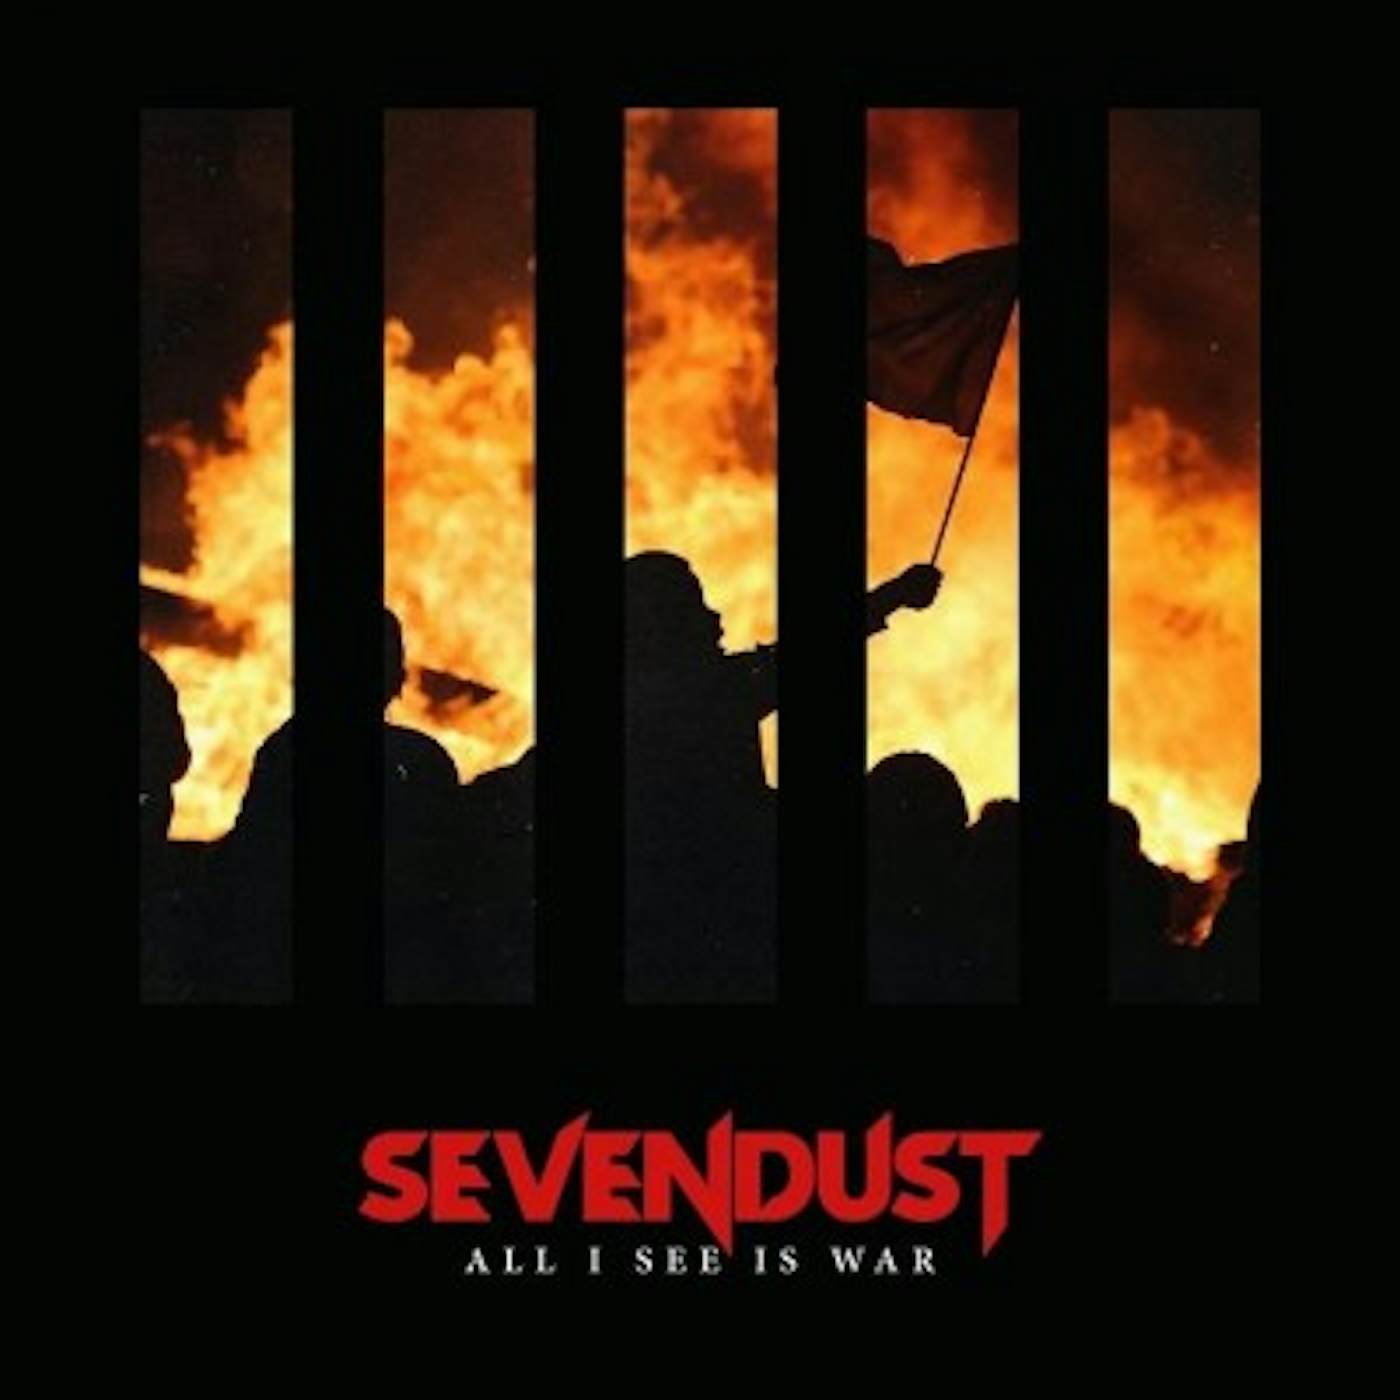 Sevendust All I See Is War Vinyl Record